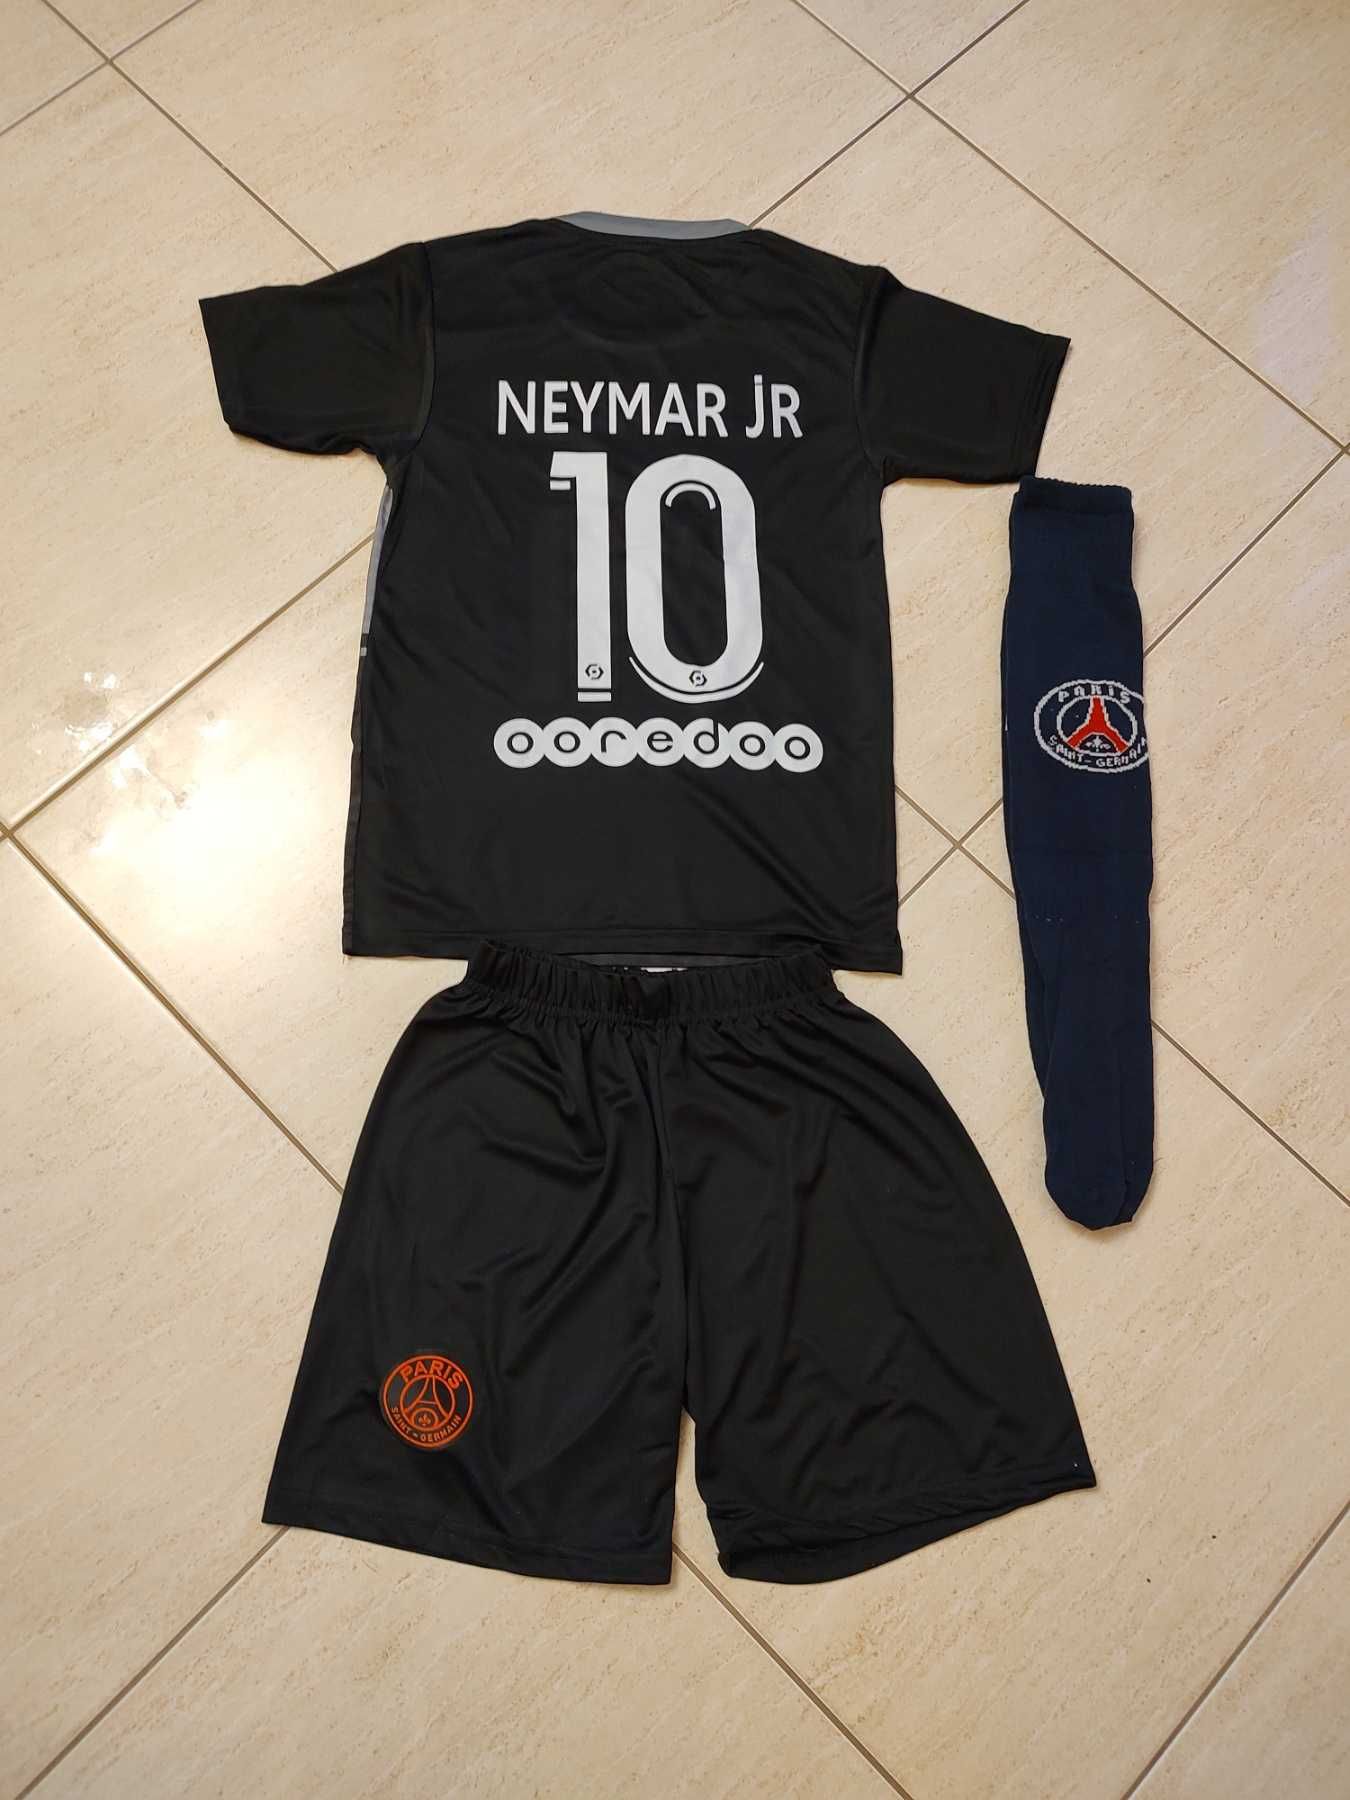 Черен Екип Неймар + Топка + Калци + Шапка 99лв ПСЖ PSG Neymar Детско